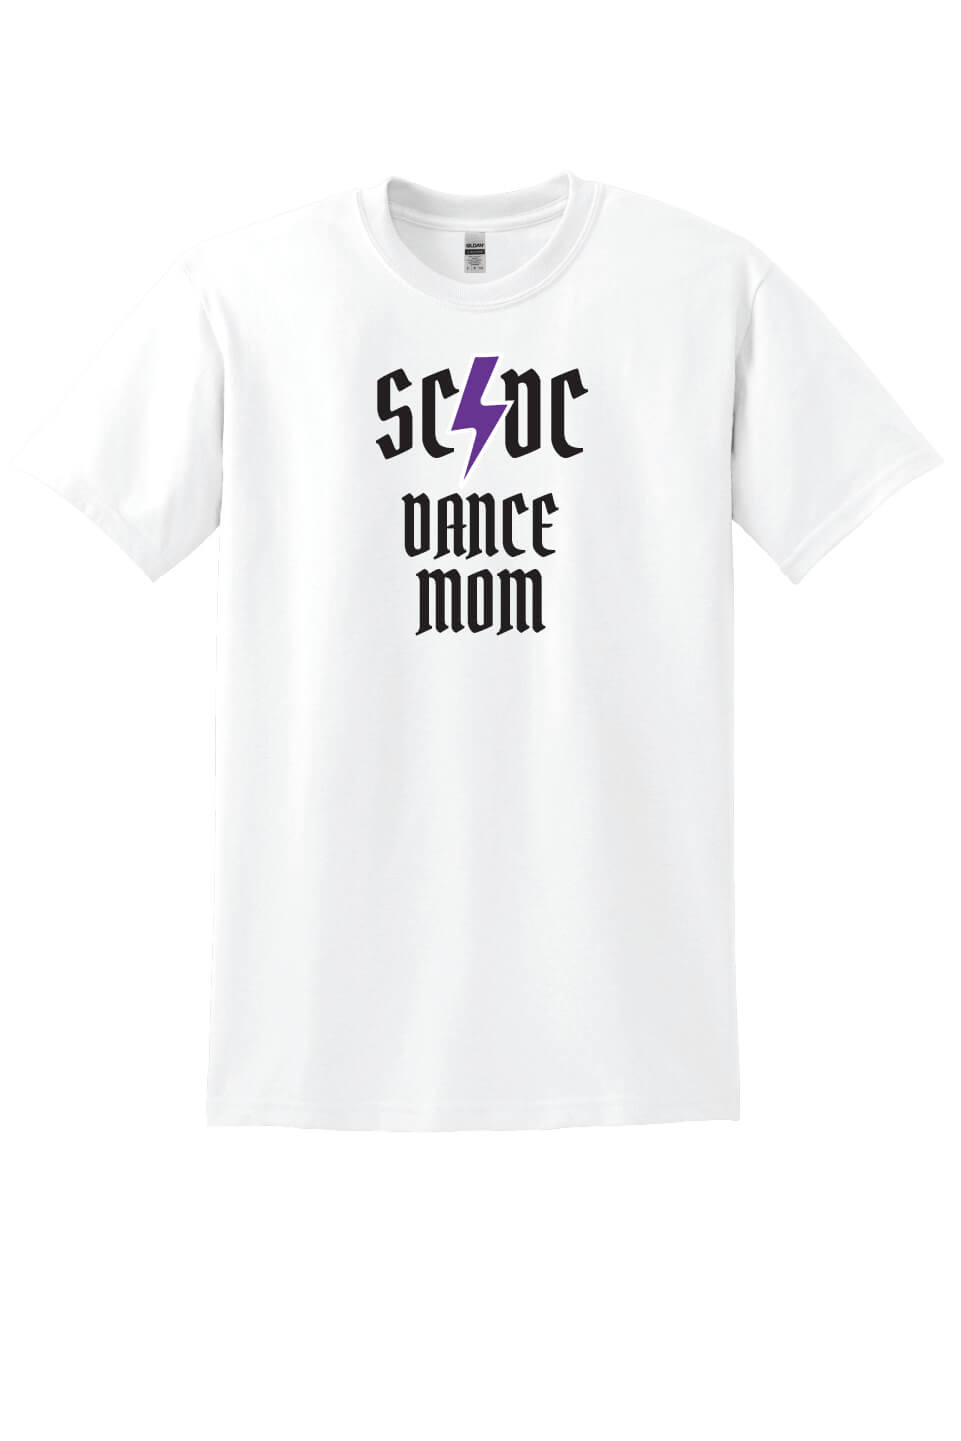 SCDC Mom Short Sleeve T-Shirt white